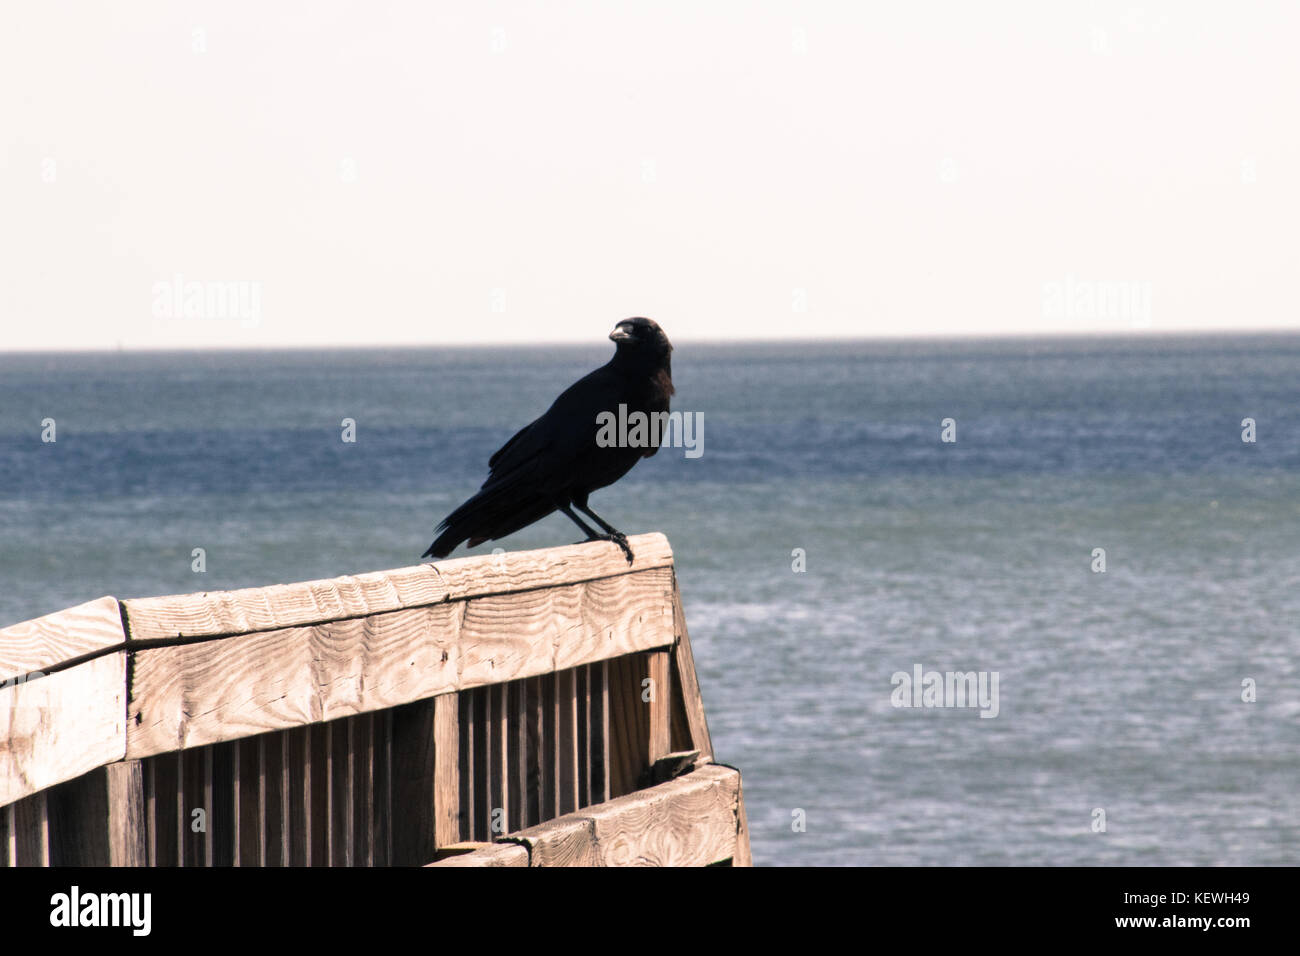 Bird si siede tranquillamente Foto Stock